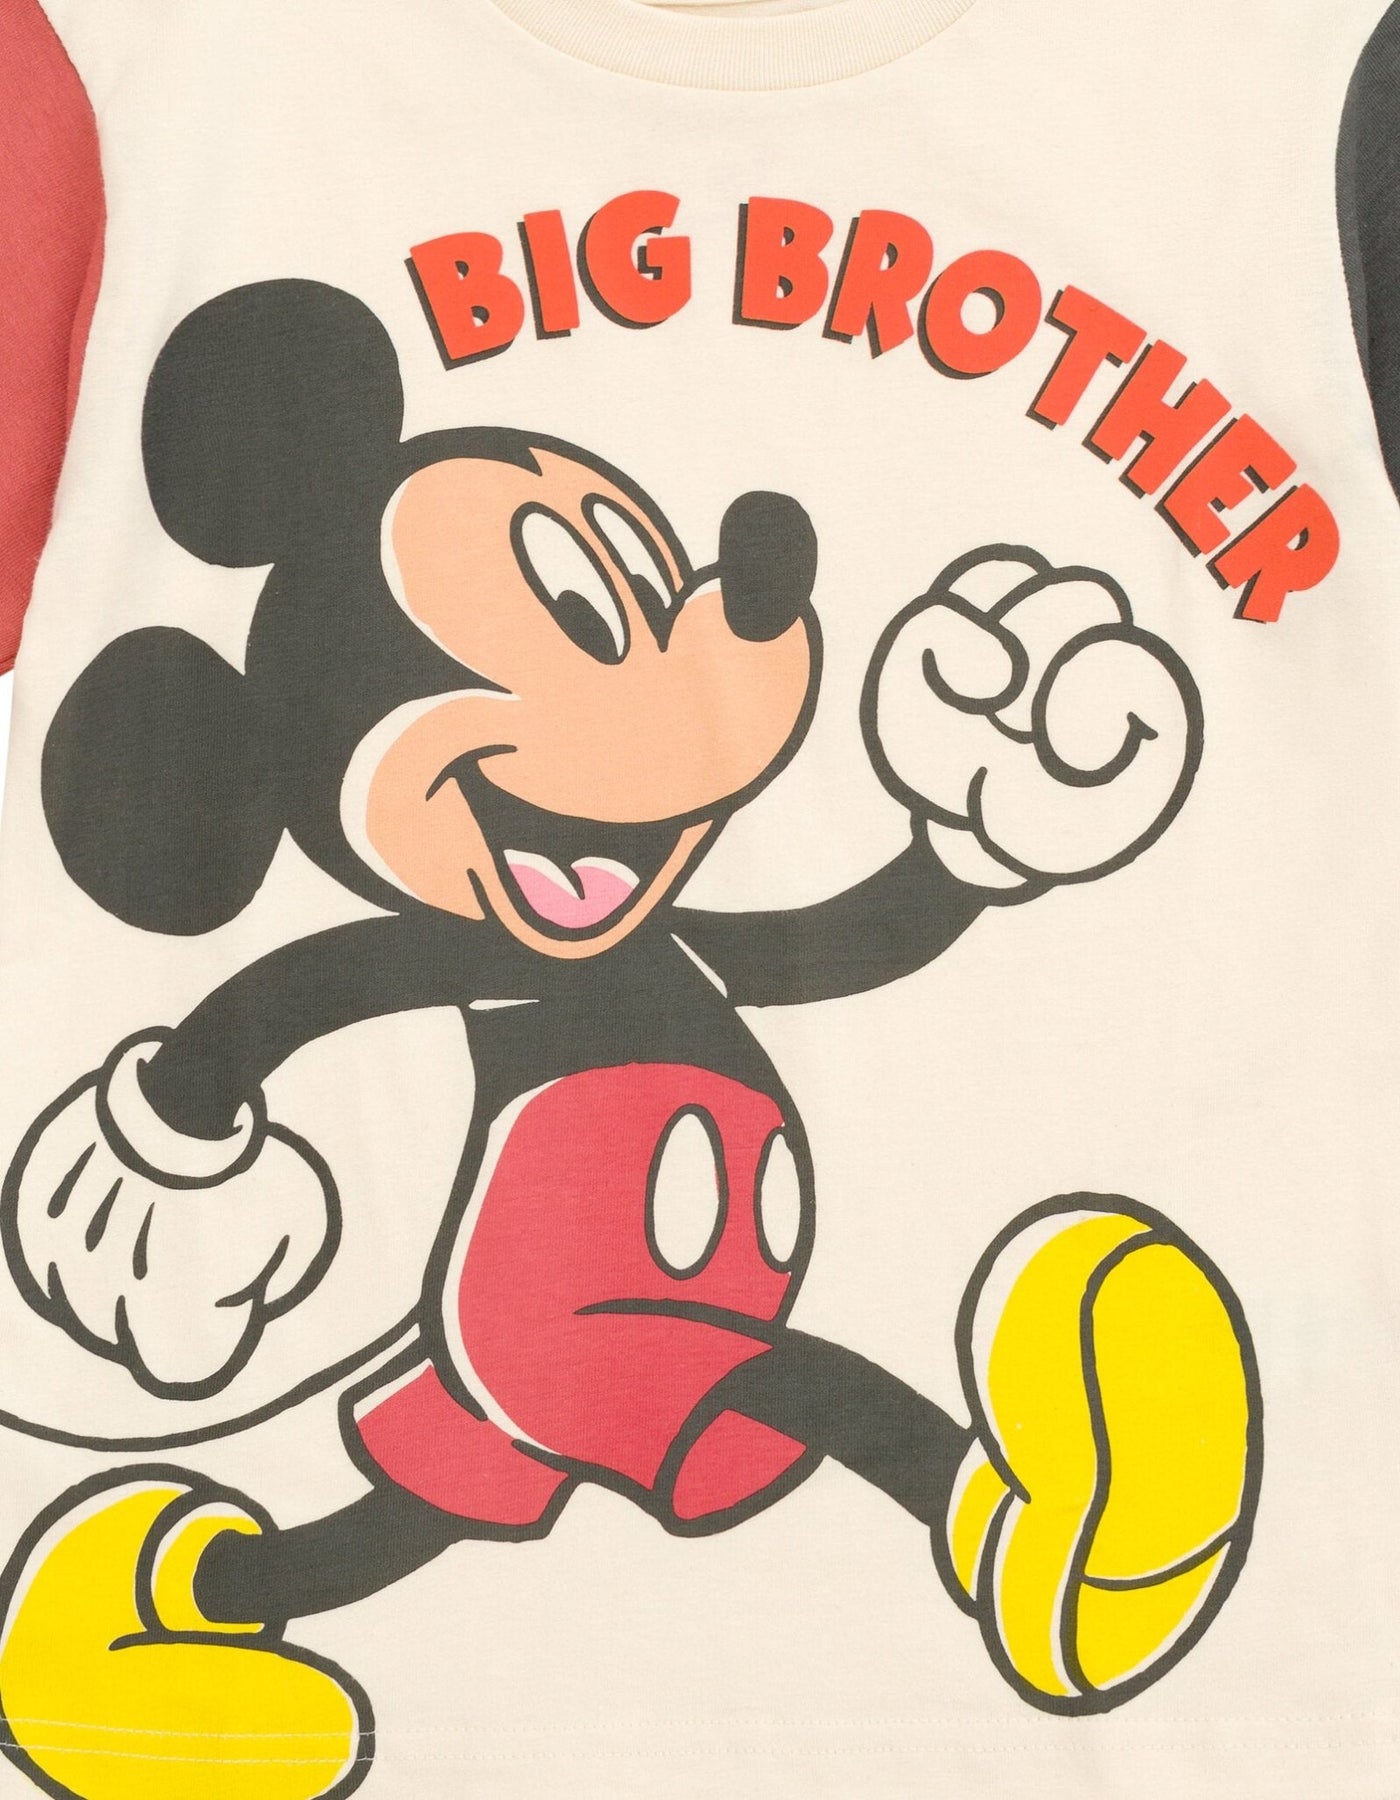 Disney Mickey Mouse Matching Family T-Shirt - imagikids